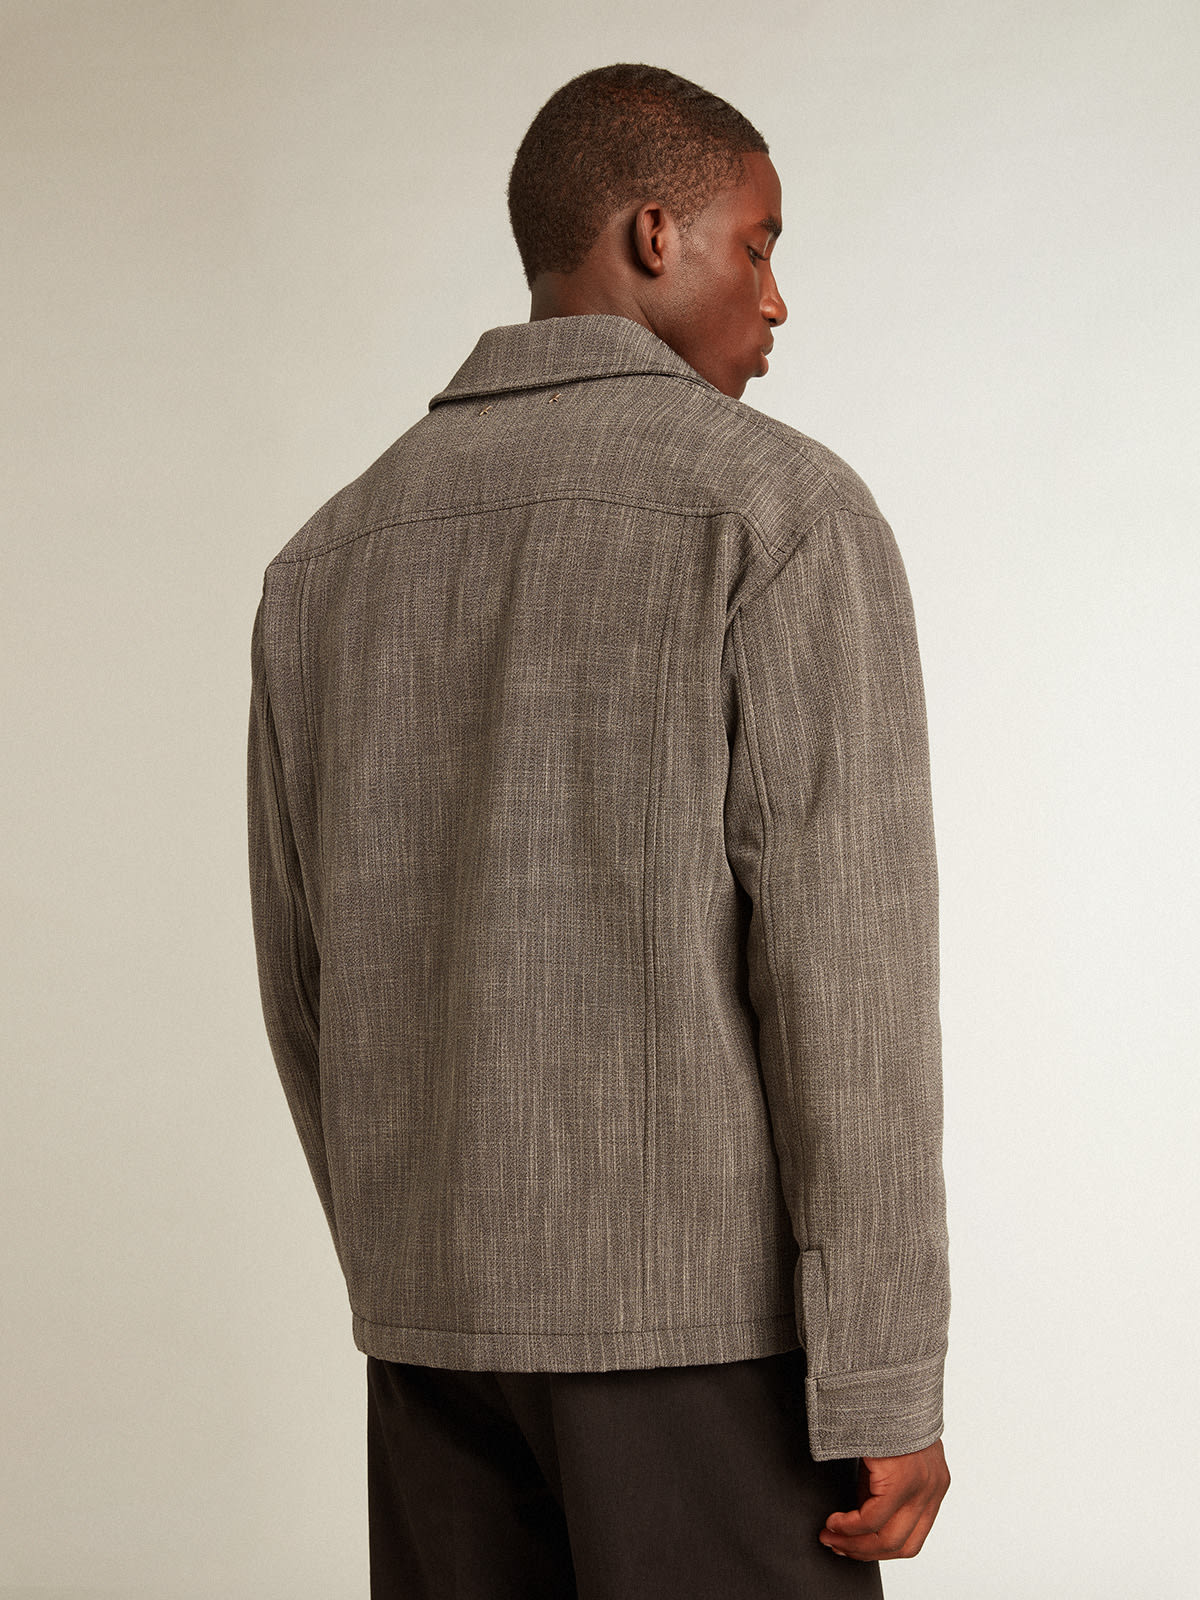 Men’s wool blend coach jacket